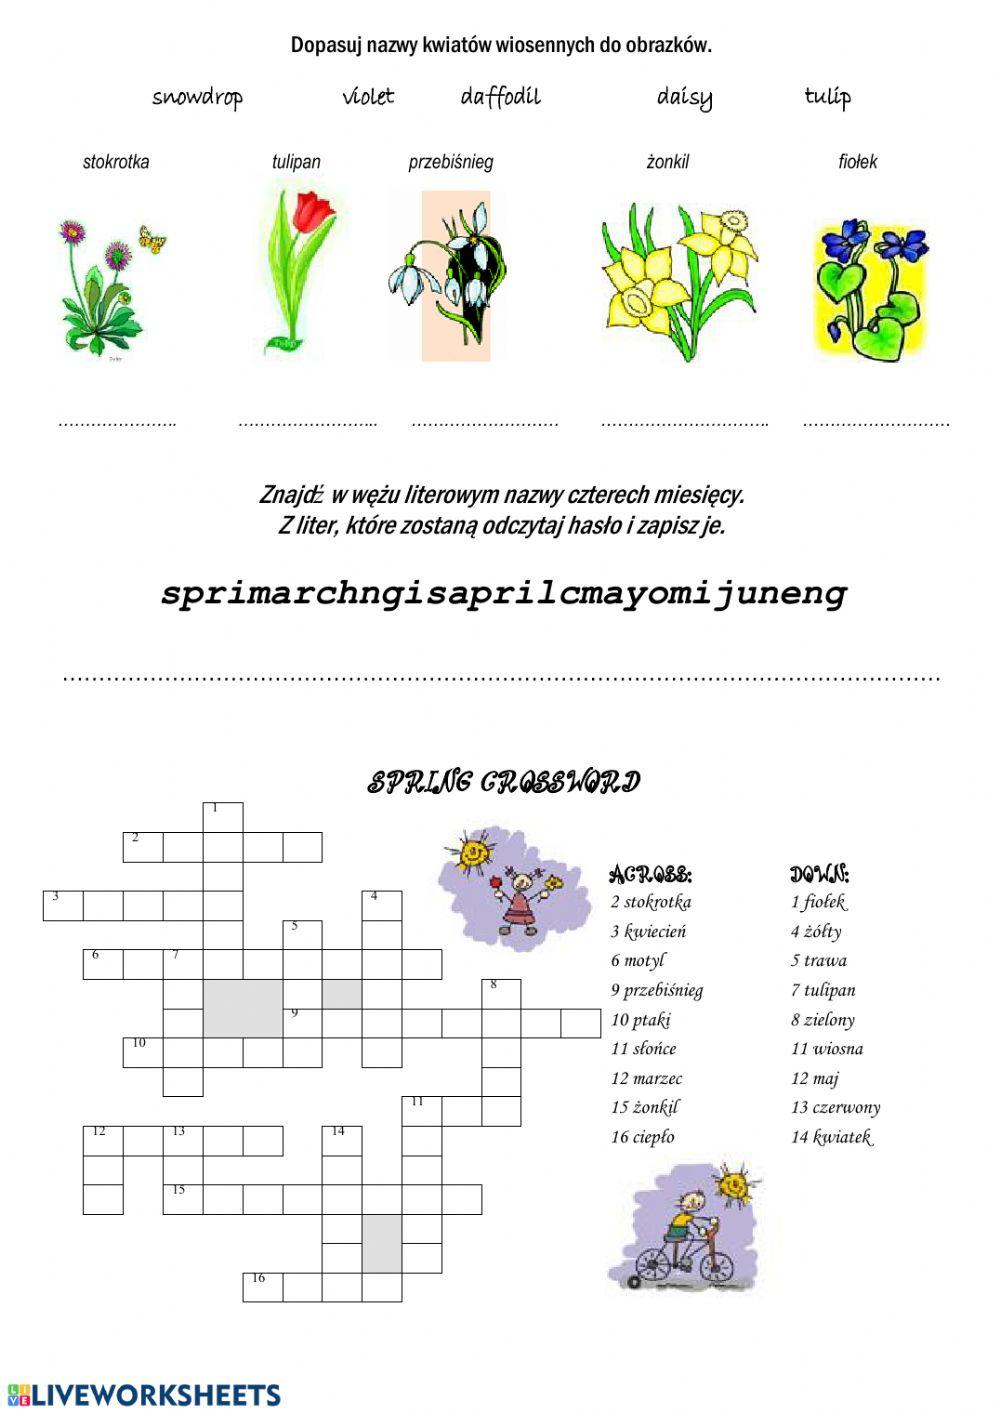 Spring crossword